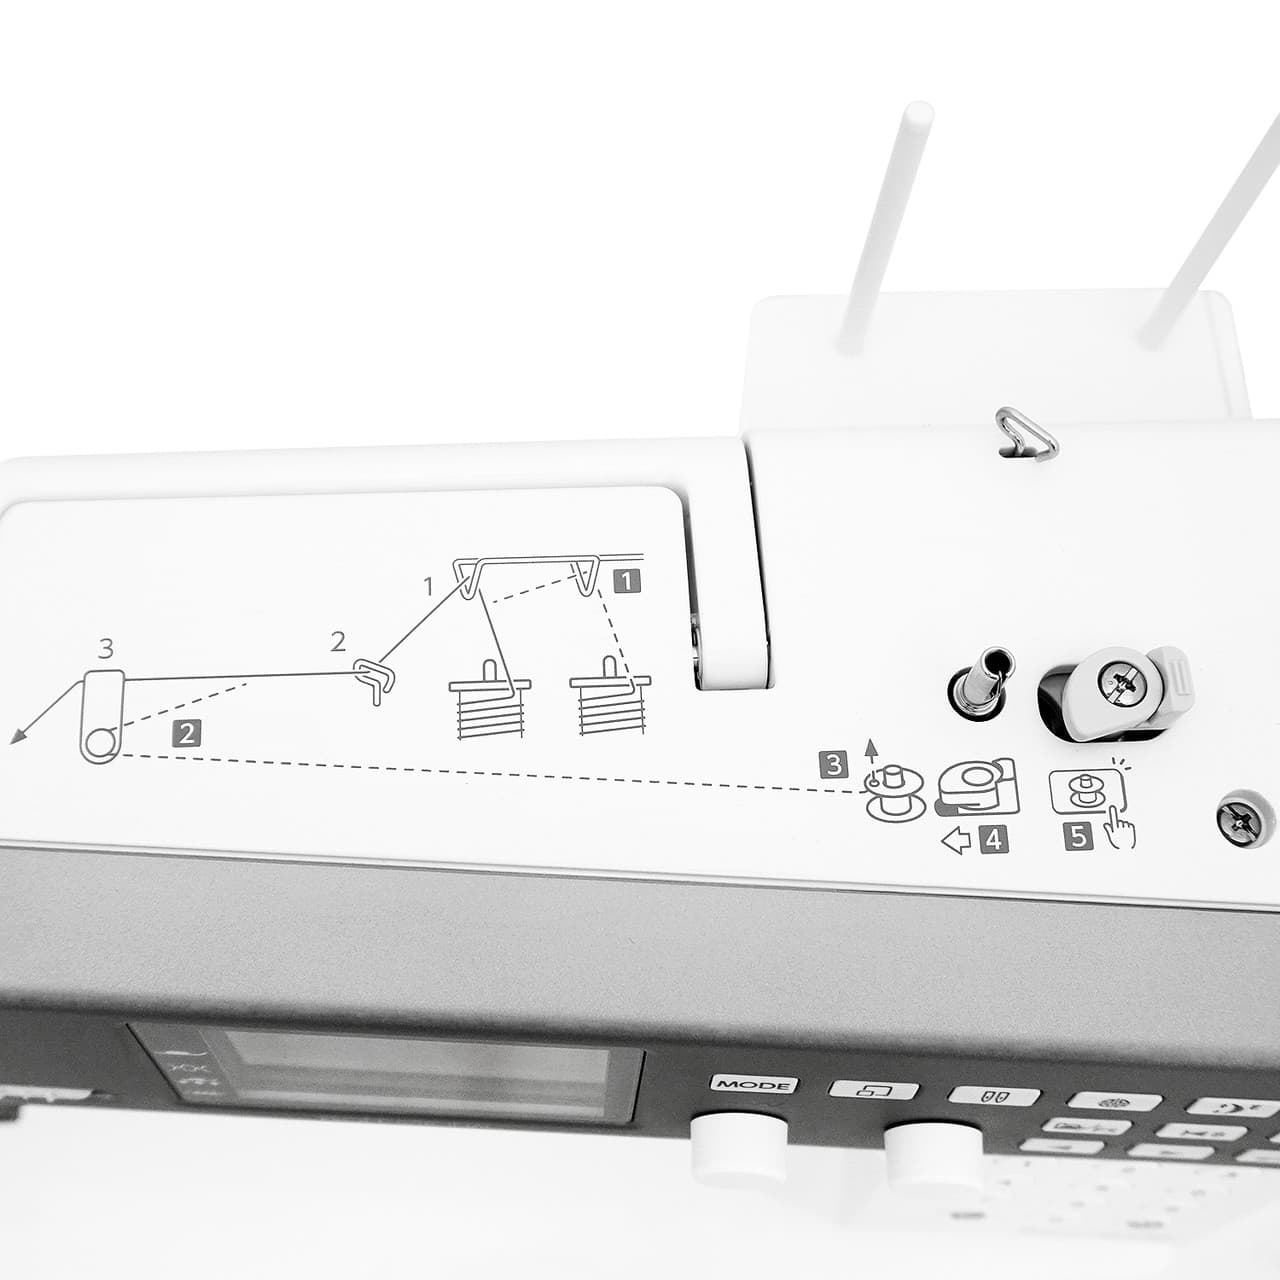 JANOME MC6700P - Máquina de coser electrónica - Imagen 4